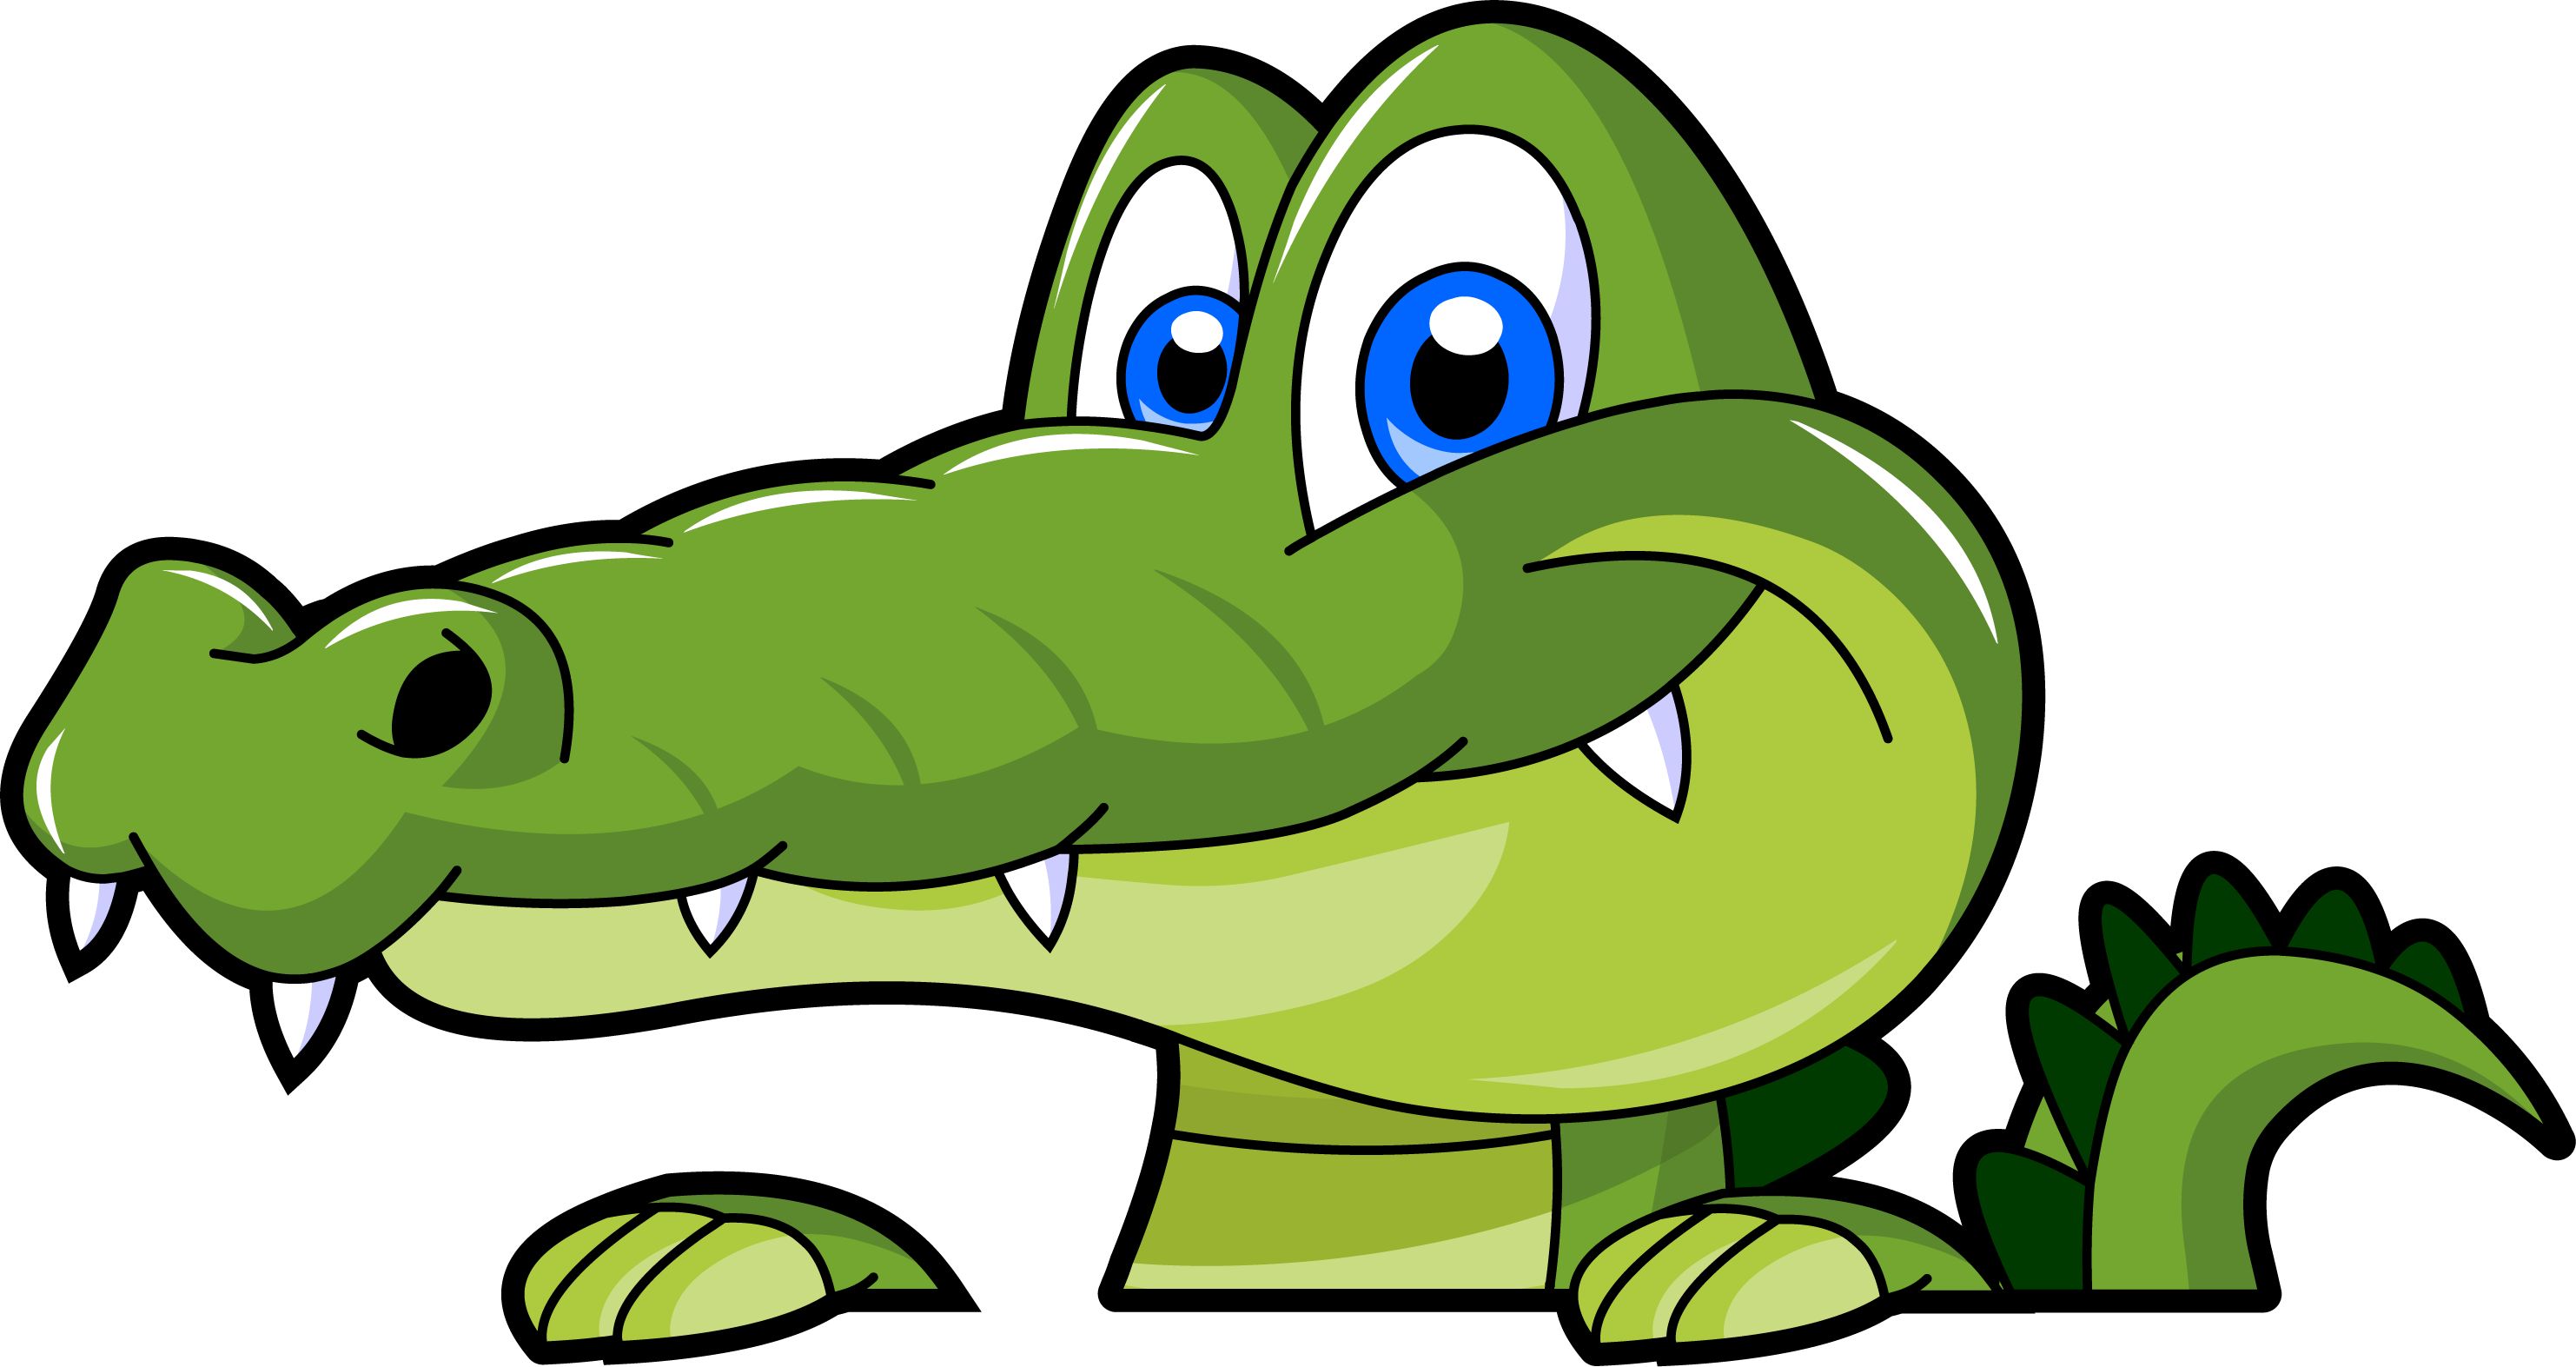 Vector Illustration Of A Croc